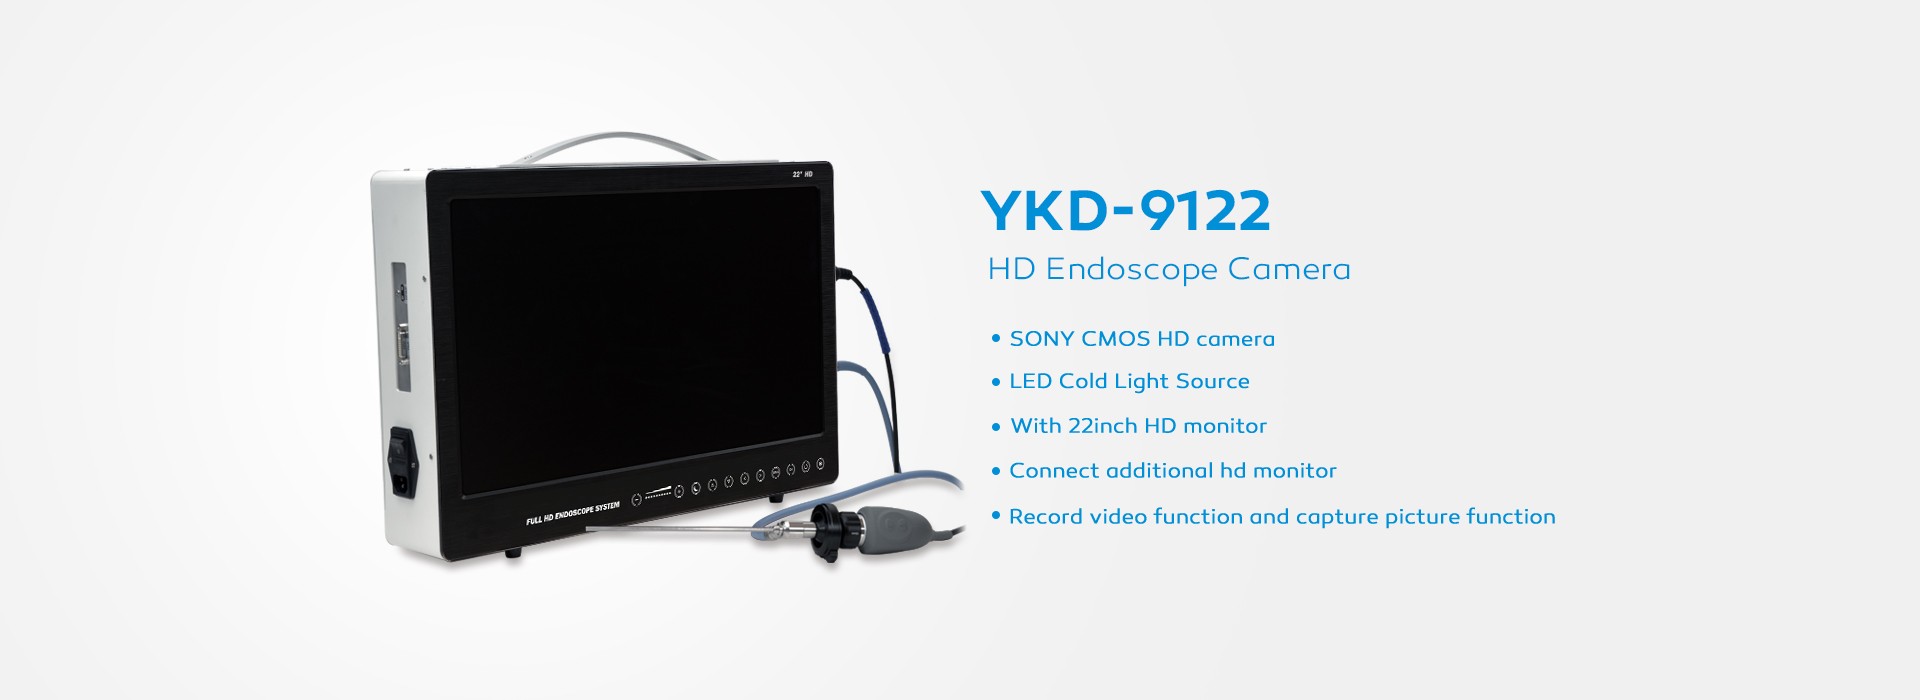 Full HD Endoscope Camera